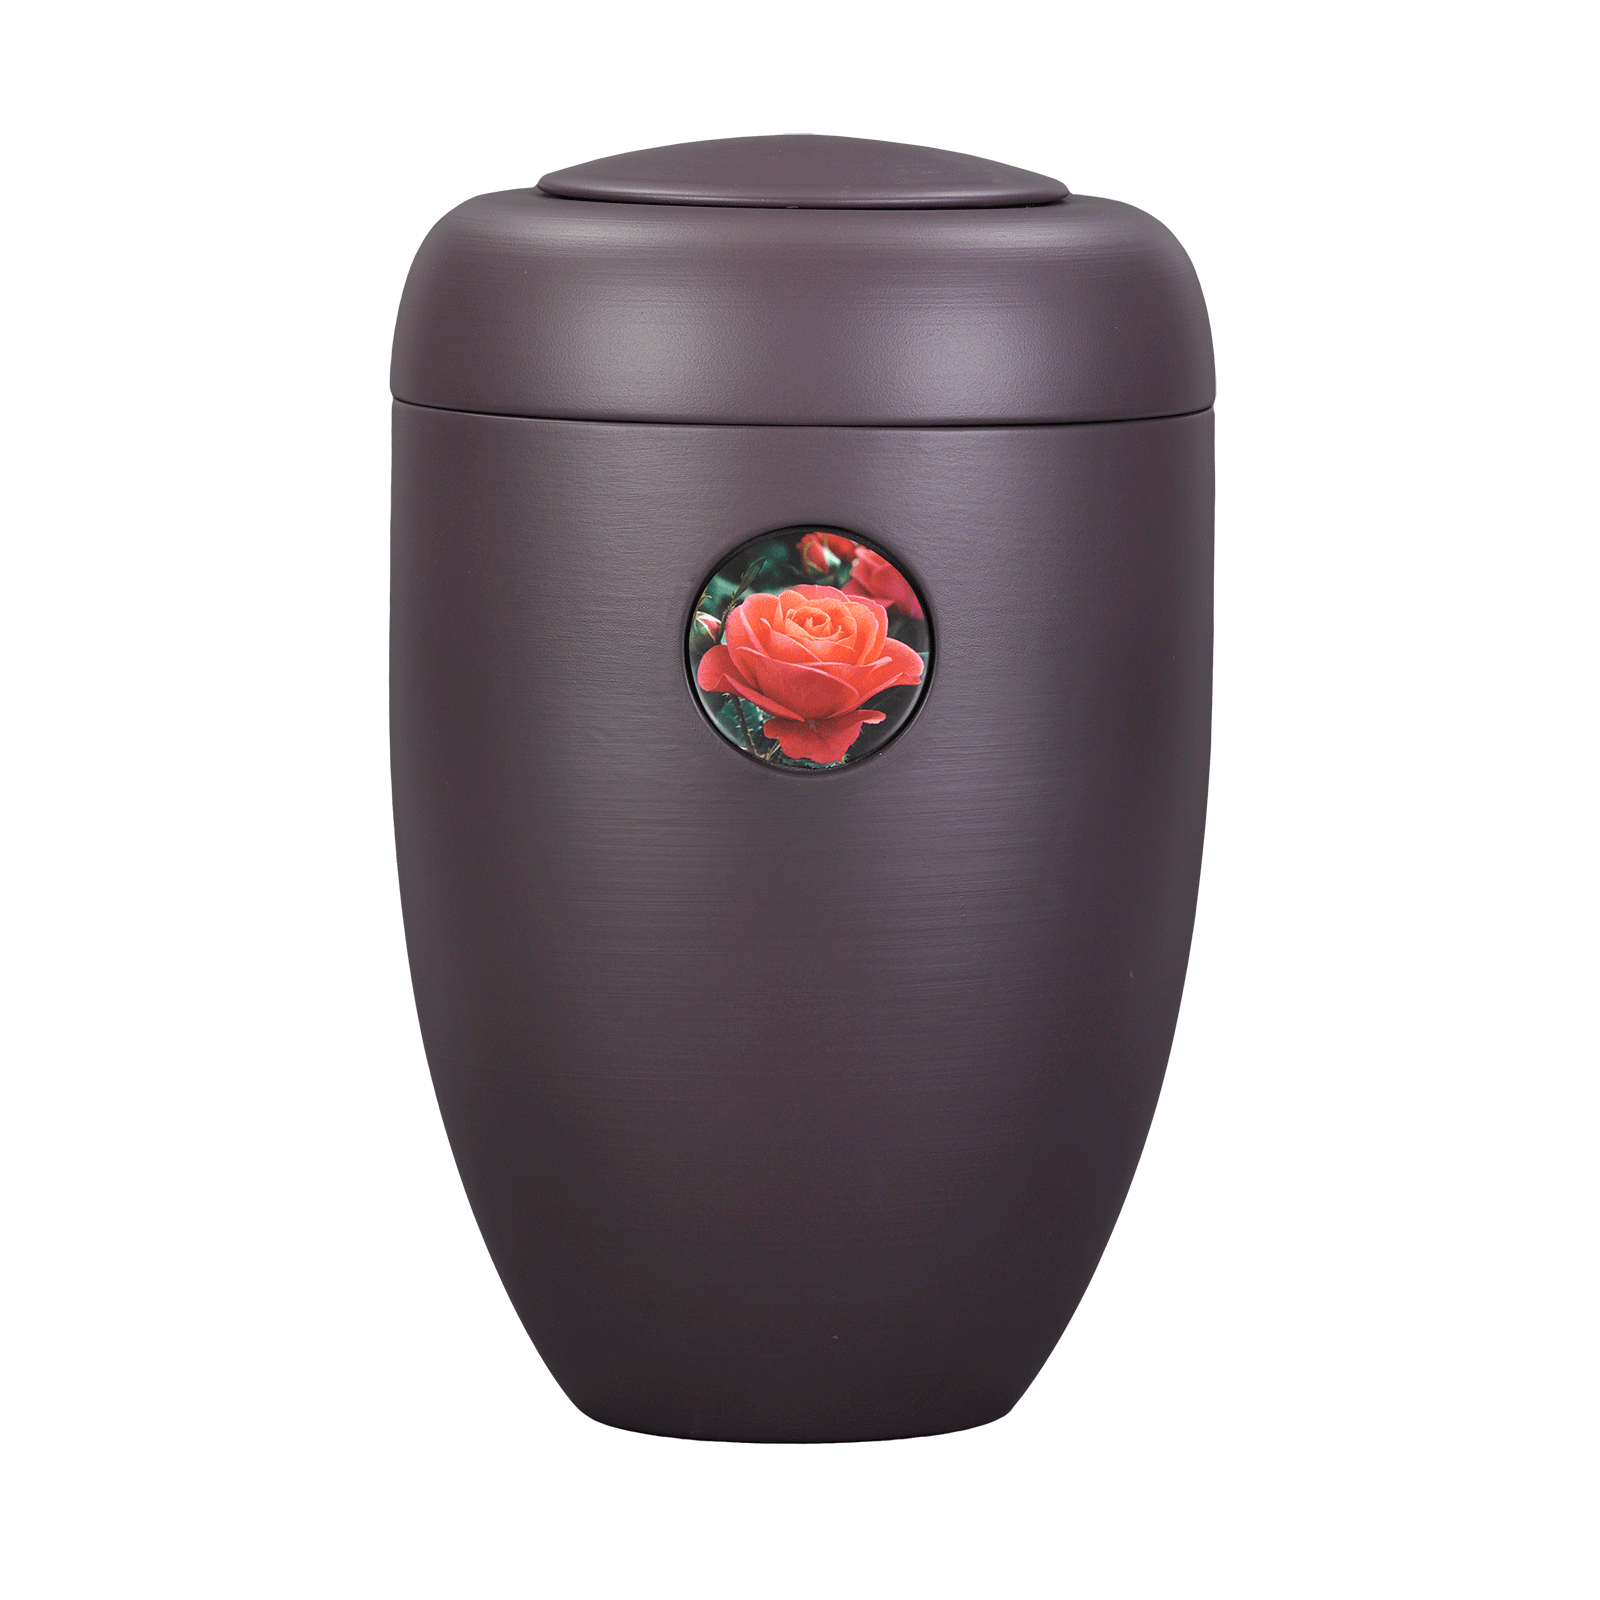 Auberginefarbene Memori-Urne mit lachsfarbener Rose Button